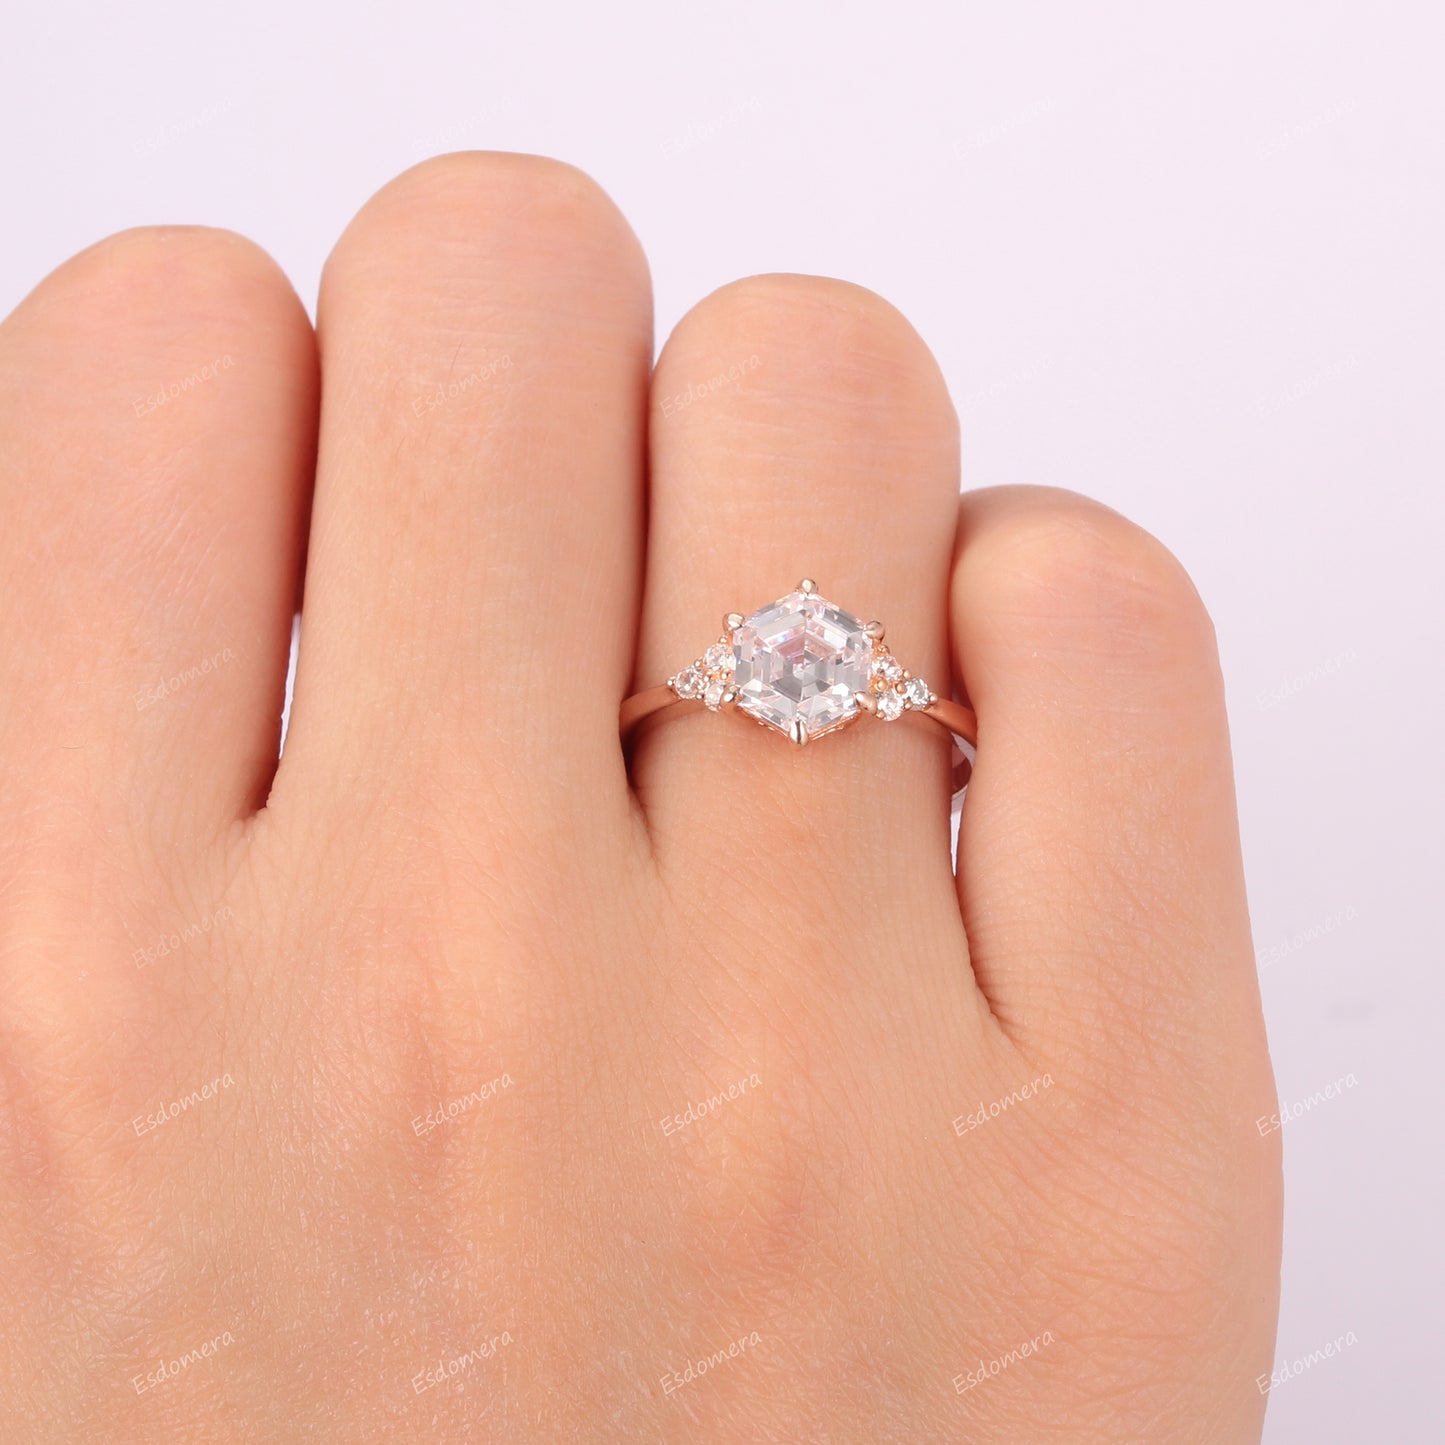 6 Prongs 1.35CT Hexagon Cut Moissanite Promise Ring, Tapered Band Engagement Ring For Her, Moissanites Cluster Anniversary Ring For Women